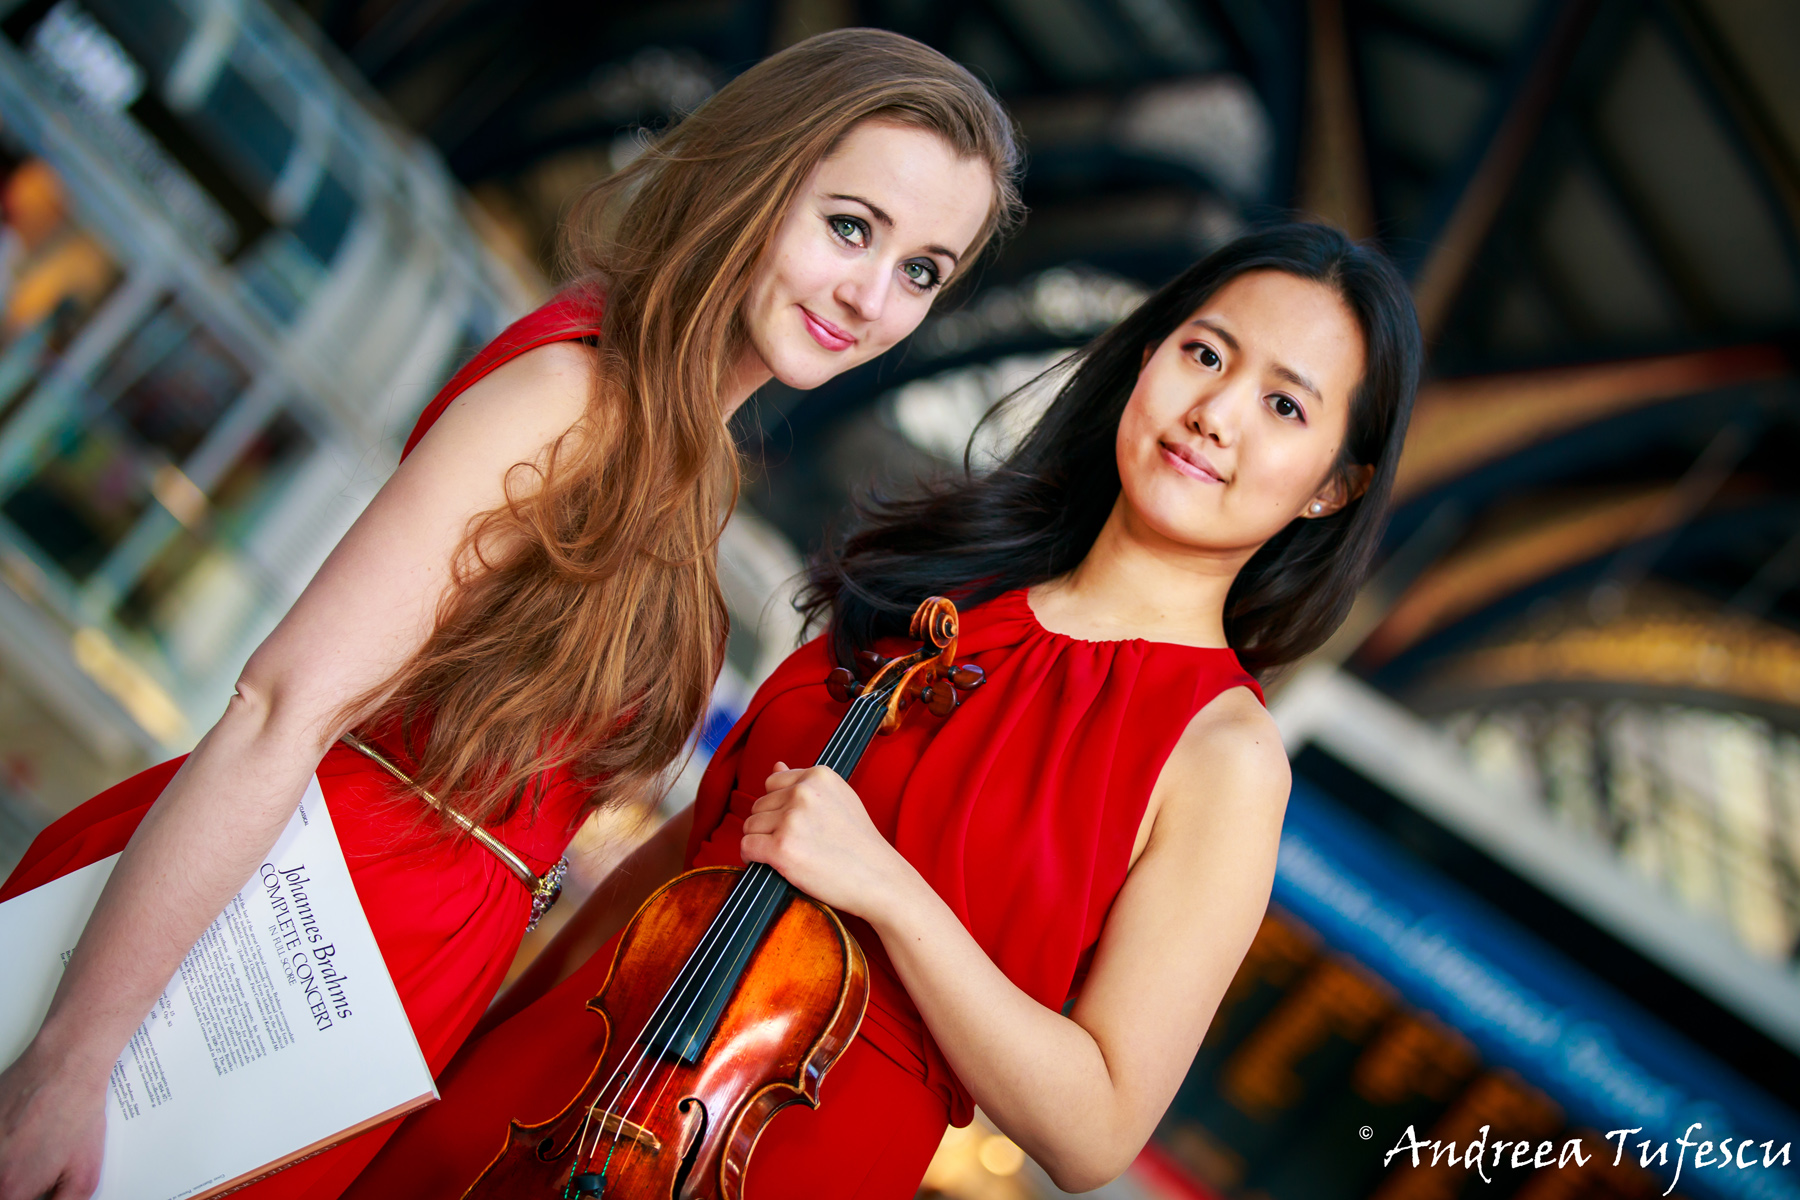  Pianist Oxana Shevchenko and Violinist JooYeon Sir - group portraits and headshots by London photographer Andreea Tufescu 